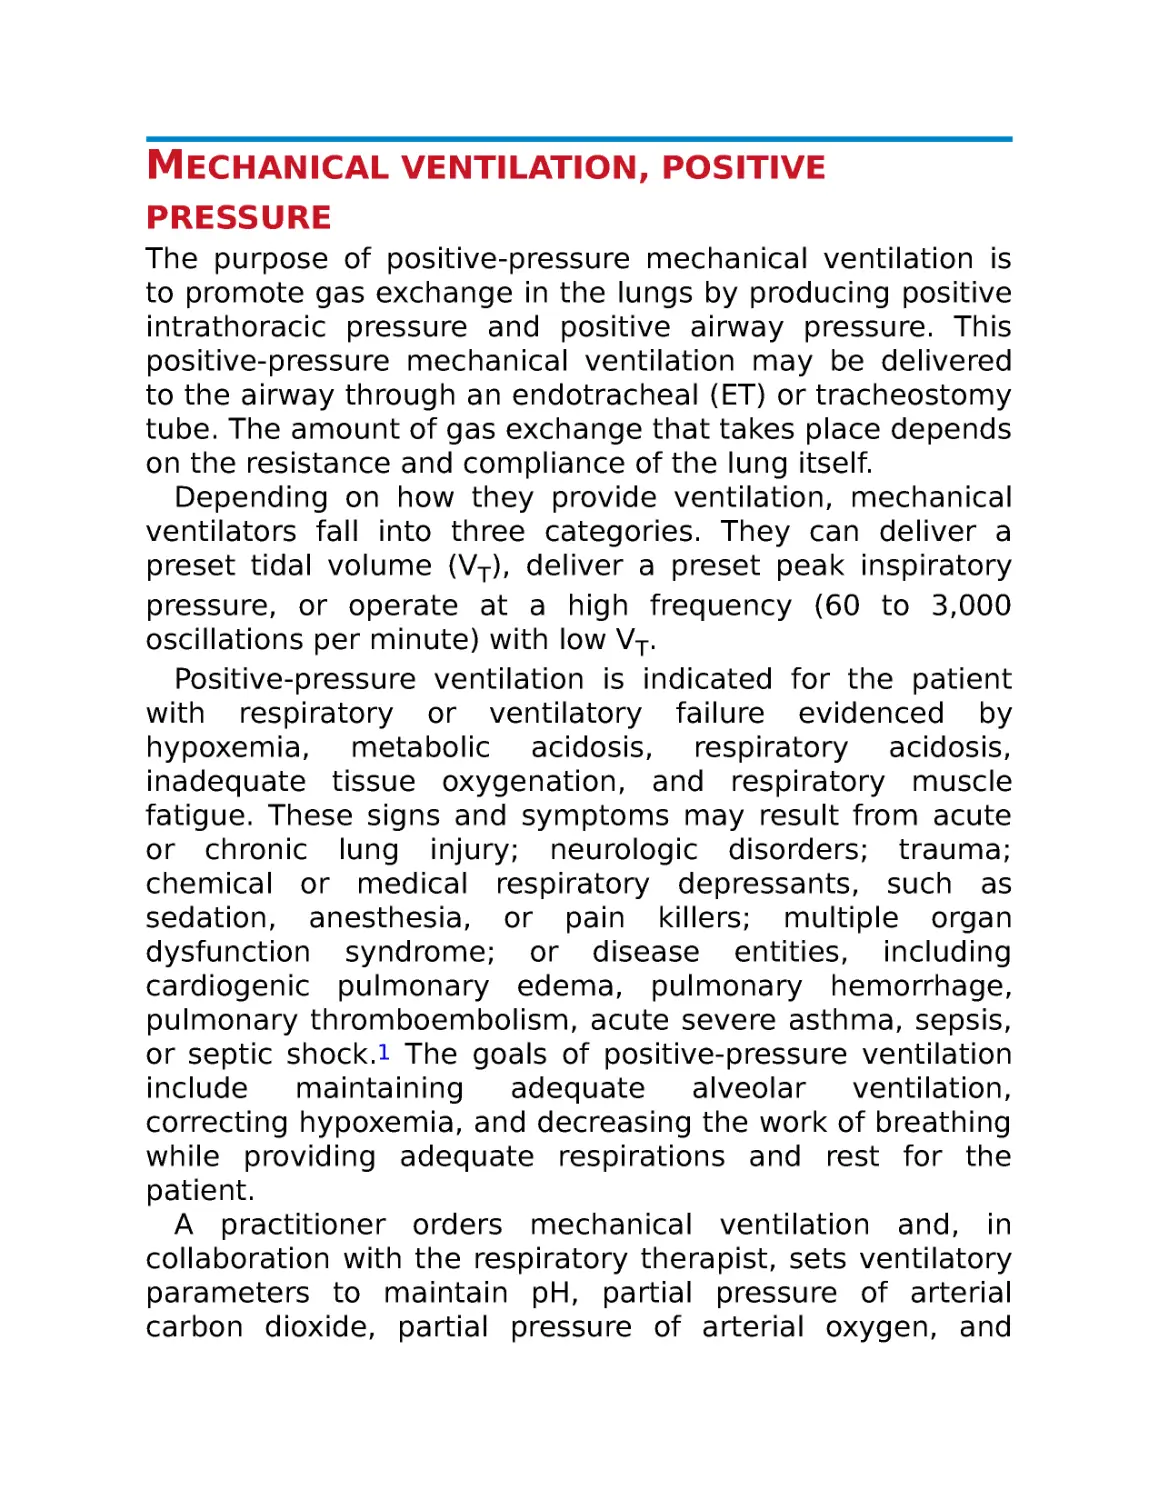 Mechanical ventilation, positive pressure